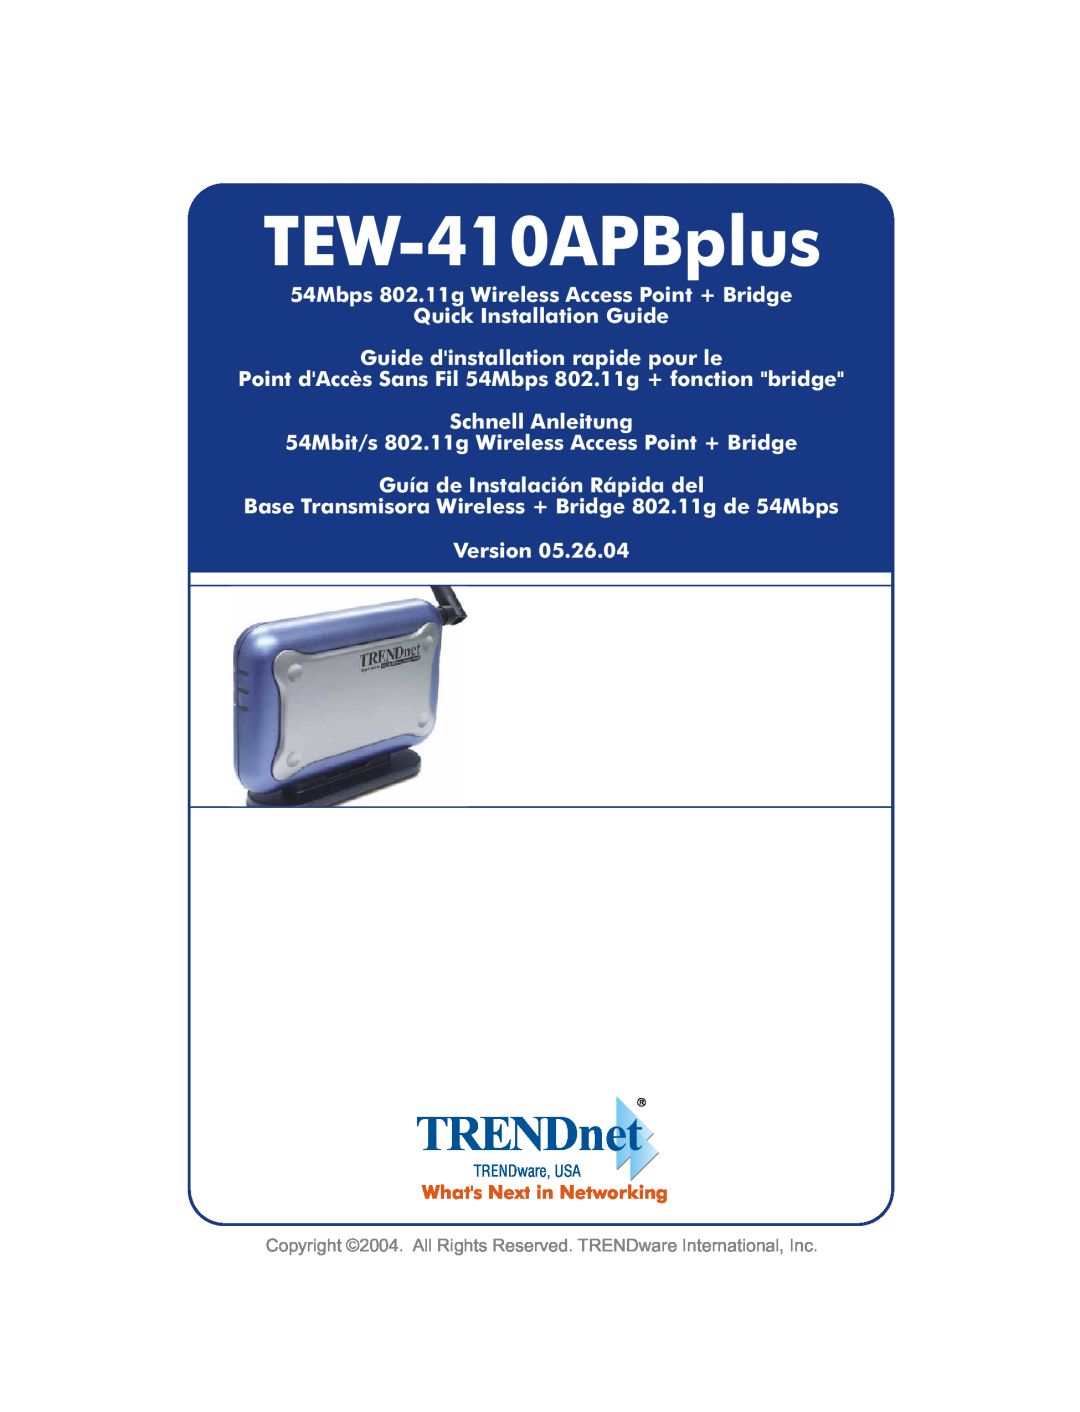 TRENDnet 54Mpbs 802.11g Wireless Access Point + Bridge manual TEW-410APBplus, TRENDnet 